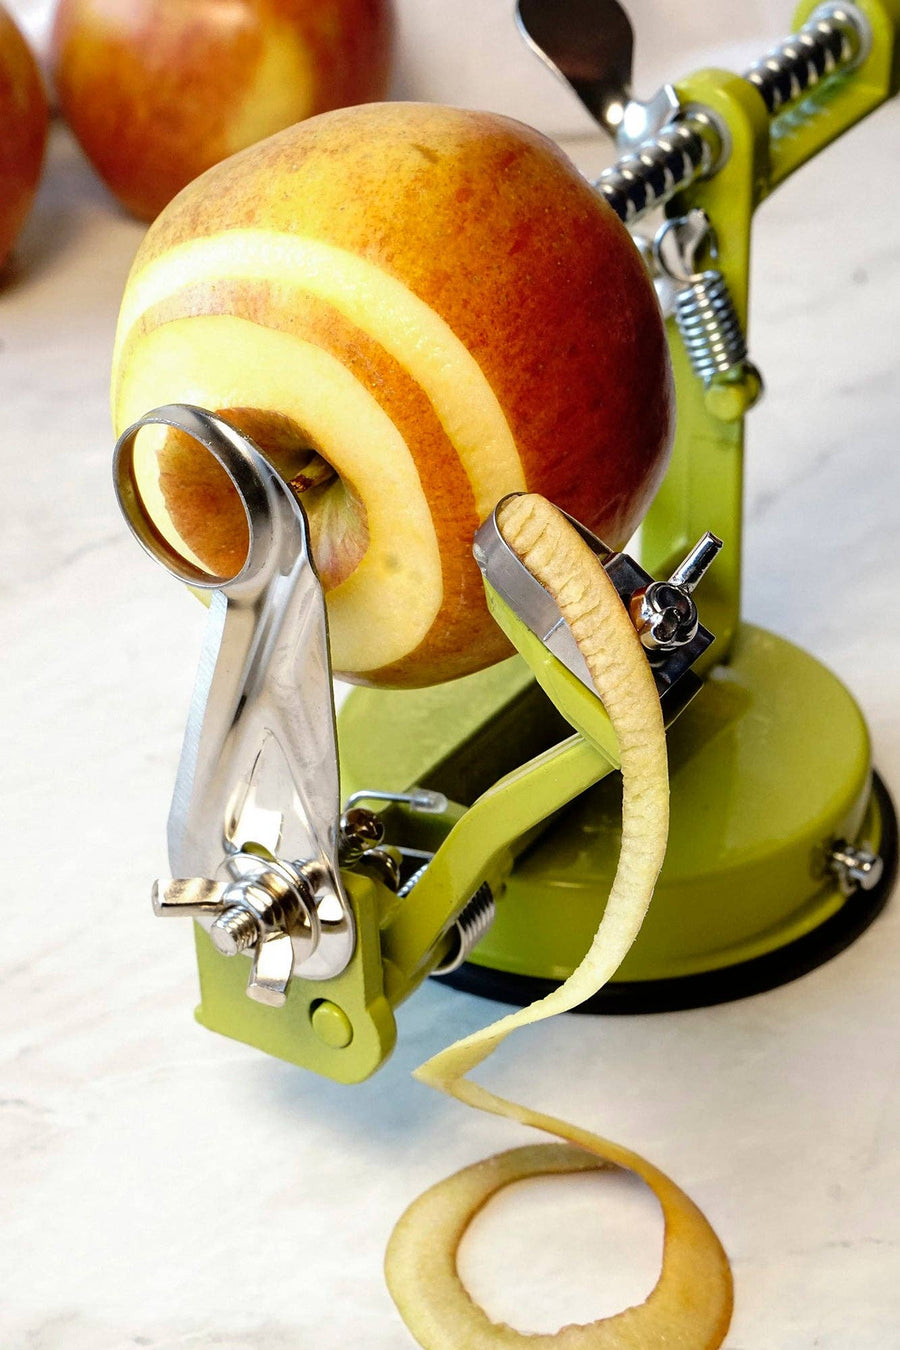 Old Fashioned Apple Slicer, Corer, and Peeler